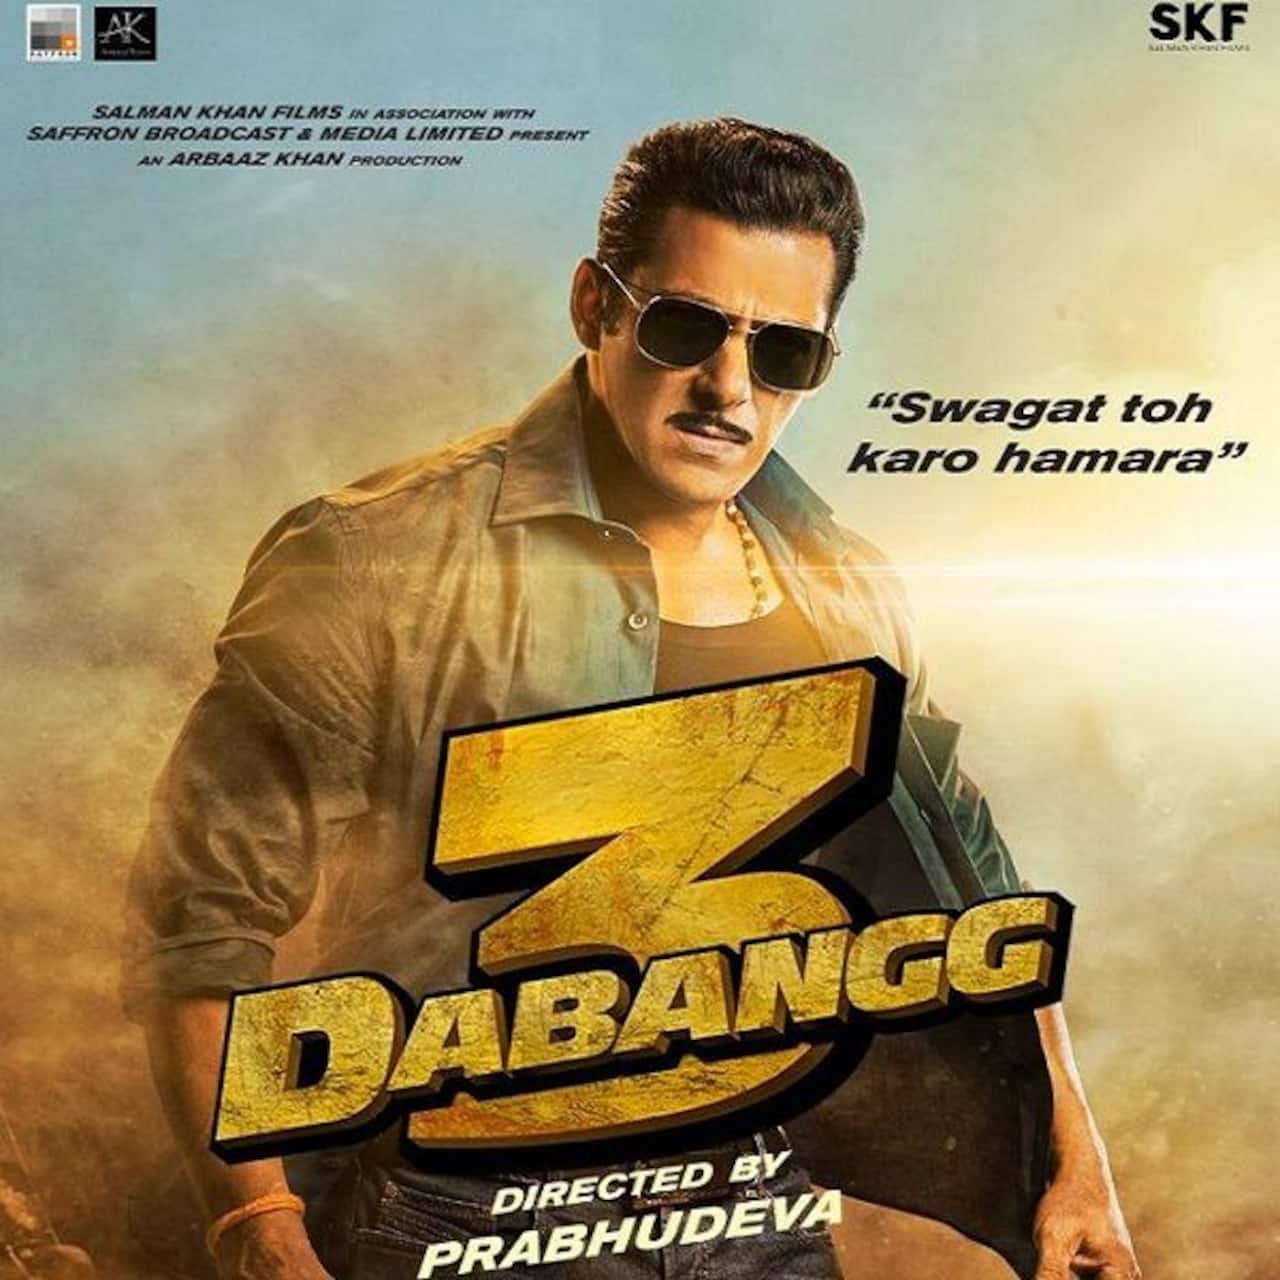 Dabangg 3 This Tollywood Megastar To Voice Chulbul Pandey Aka Salman Khan In Telugu Dubbed Version